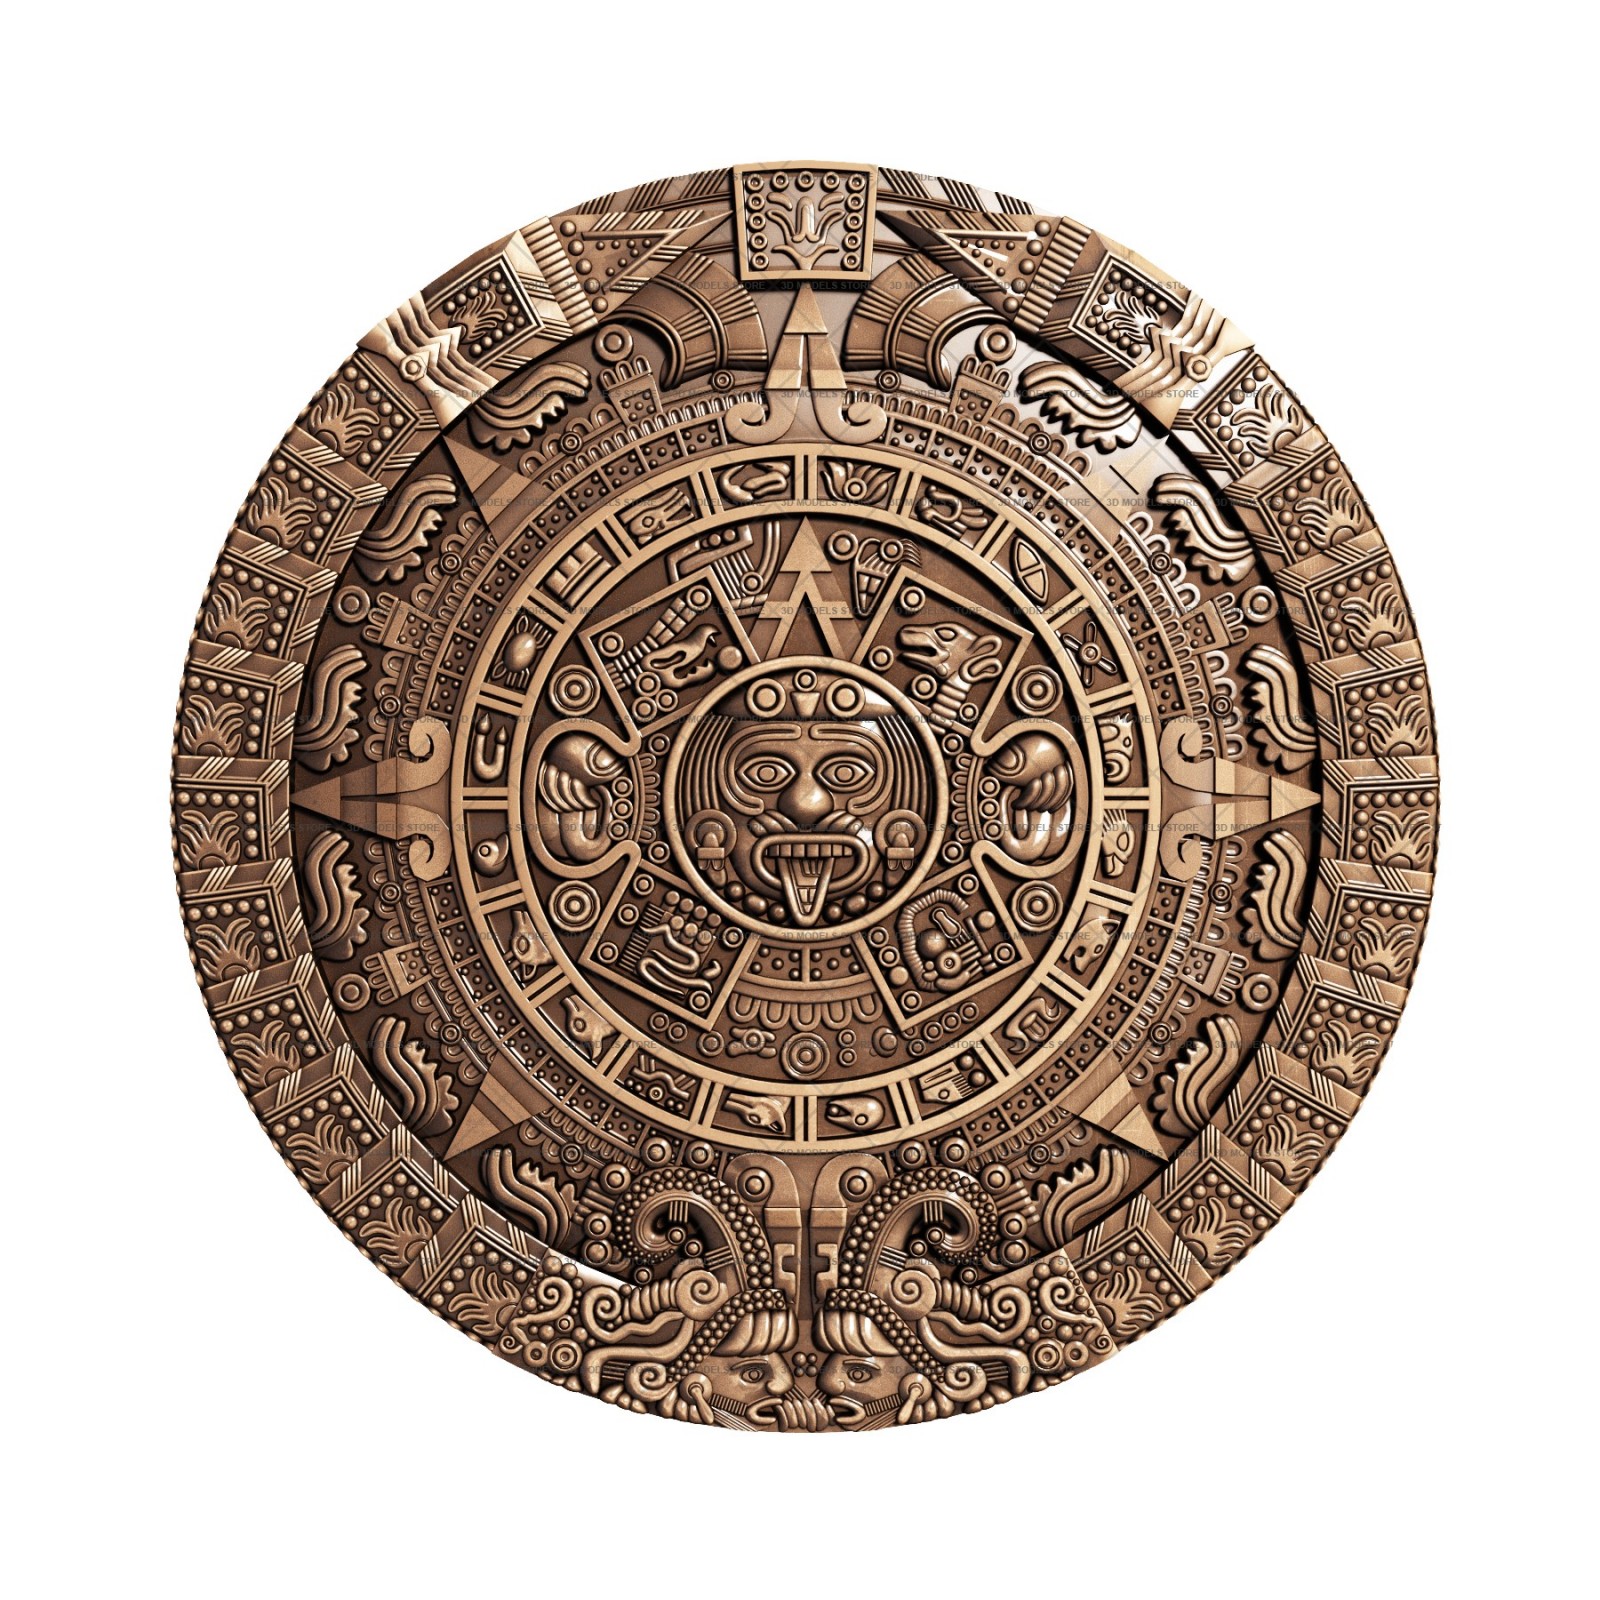 Mayan calendar brlf_0003 3d models (stl)